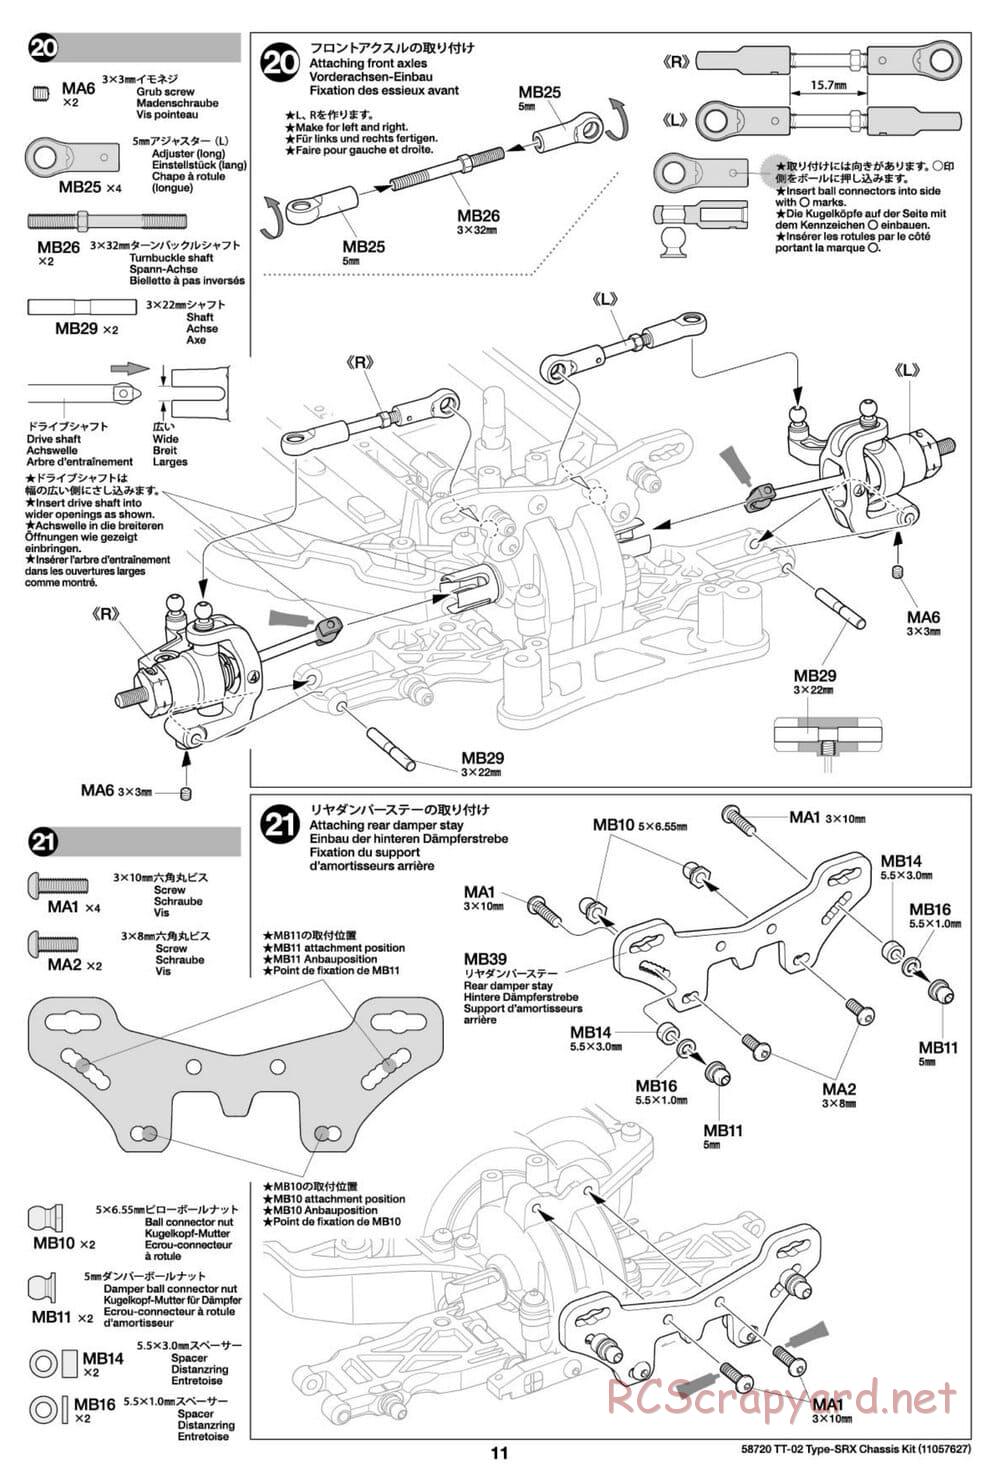 Tamiya - TT-02 Type-SRX Chassis - Manual - Page 11